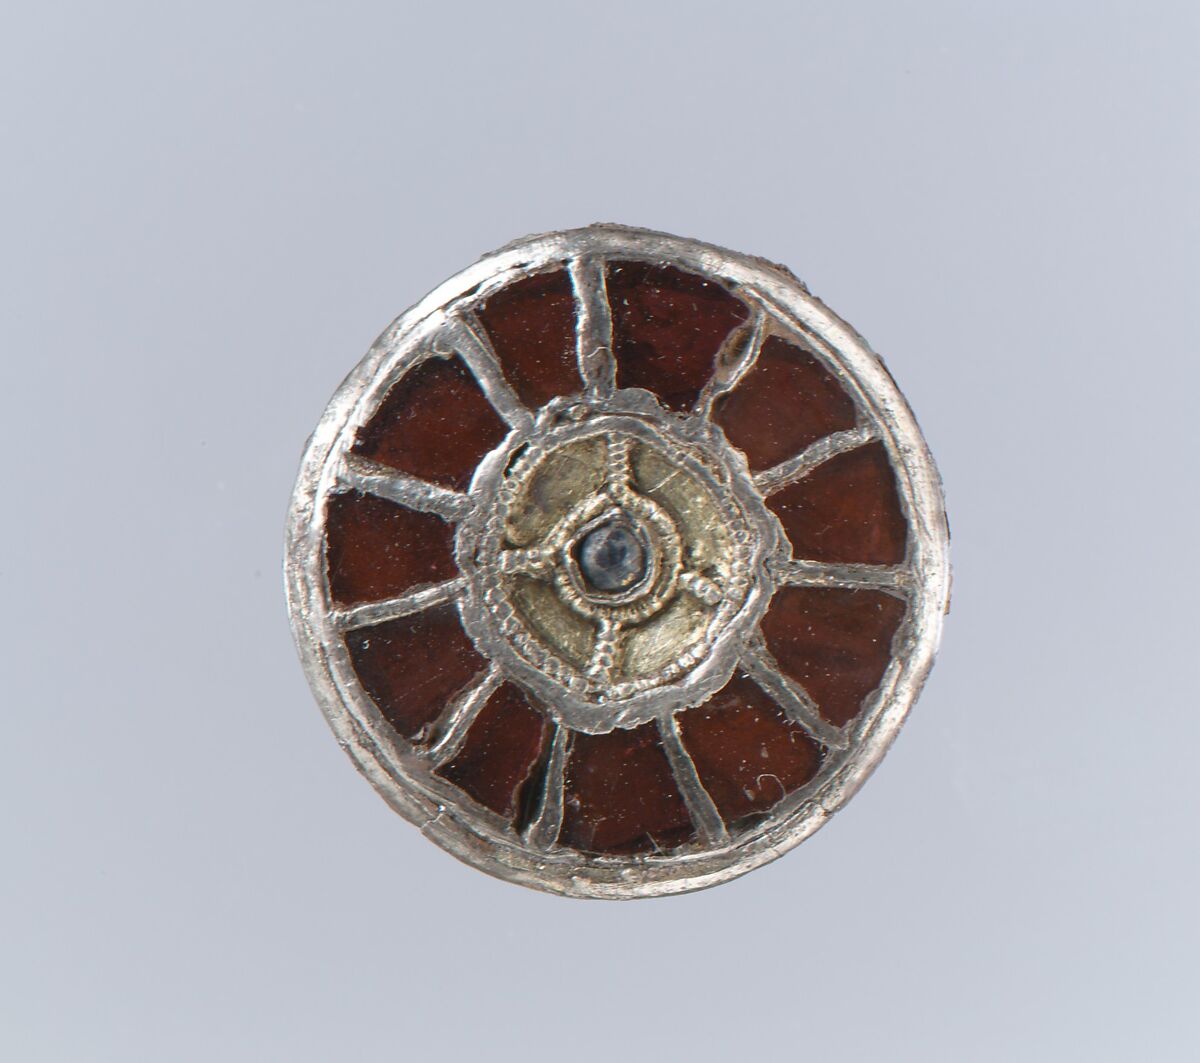 Disk Brooch, Silver, glass and garnets, Frankish 